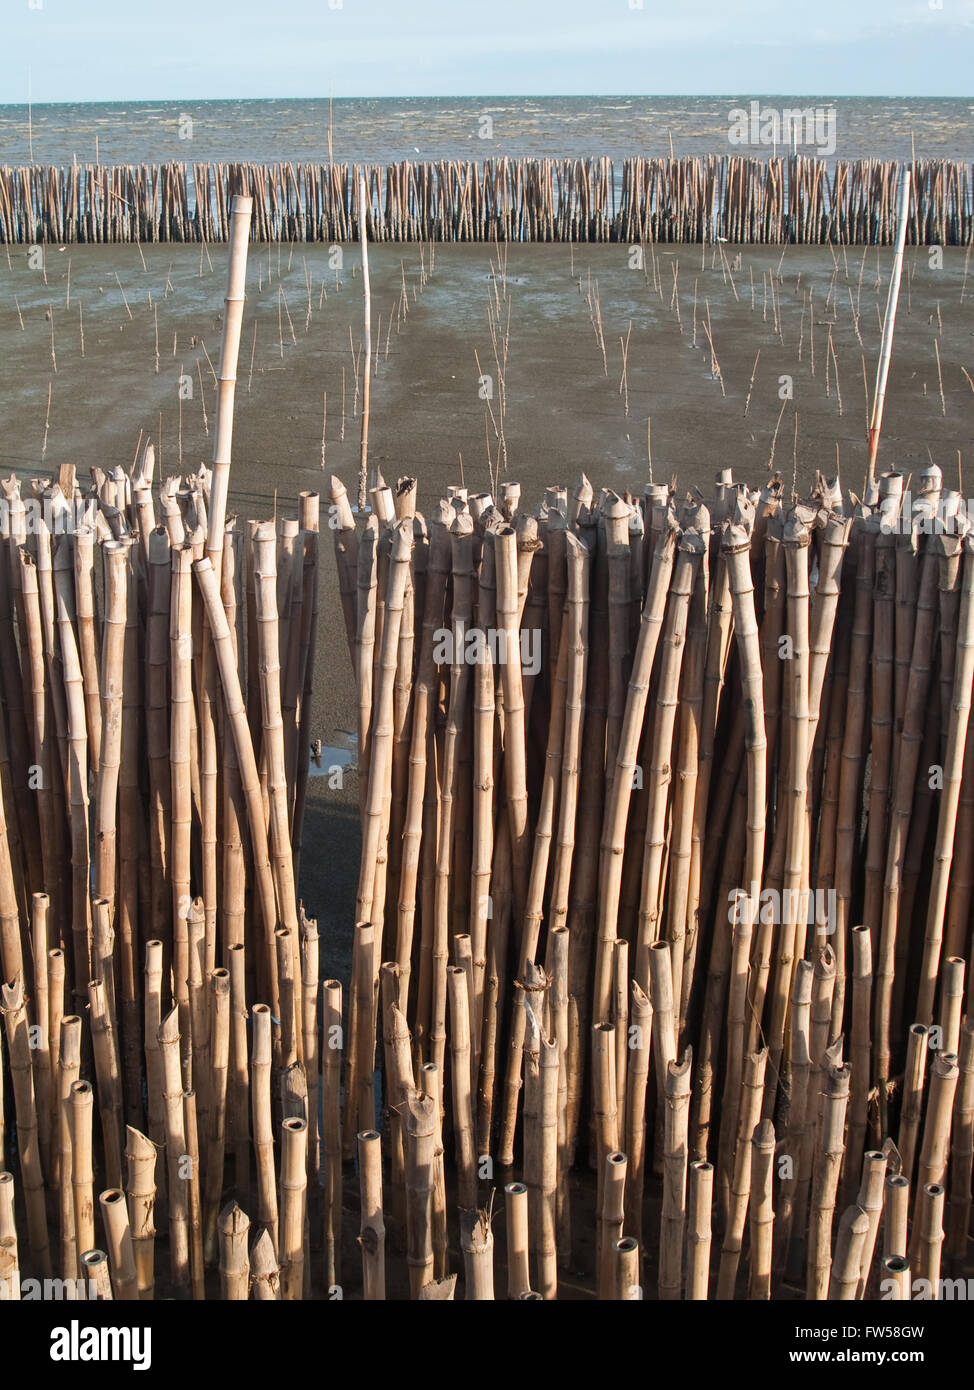 Field of bamboo tube Stock Photo